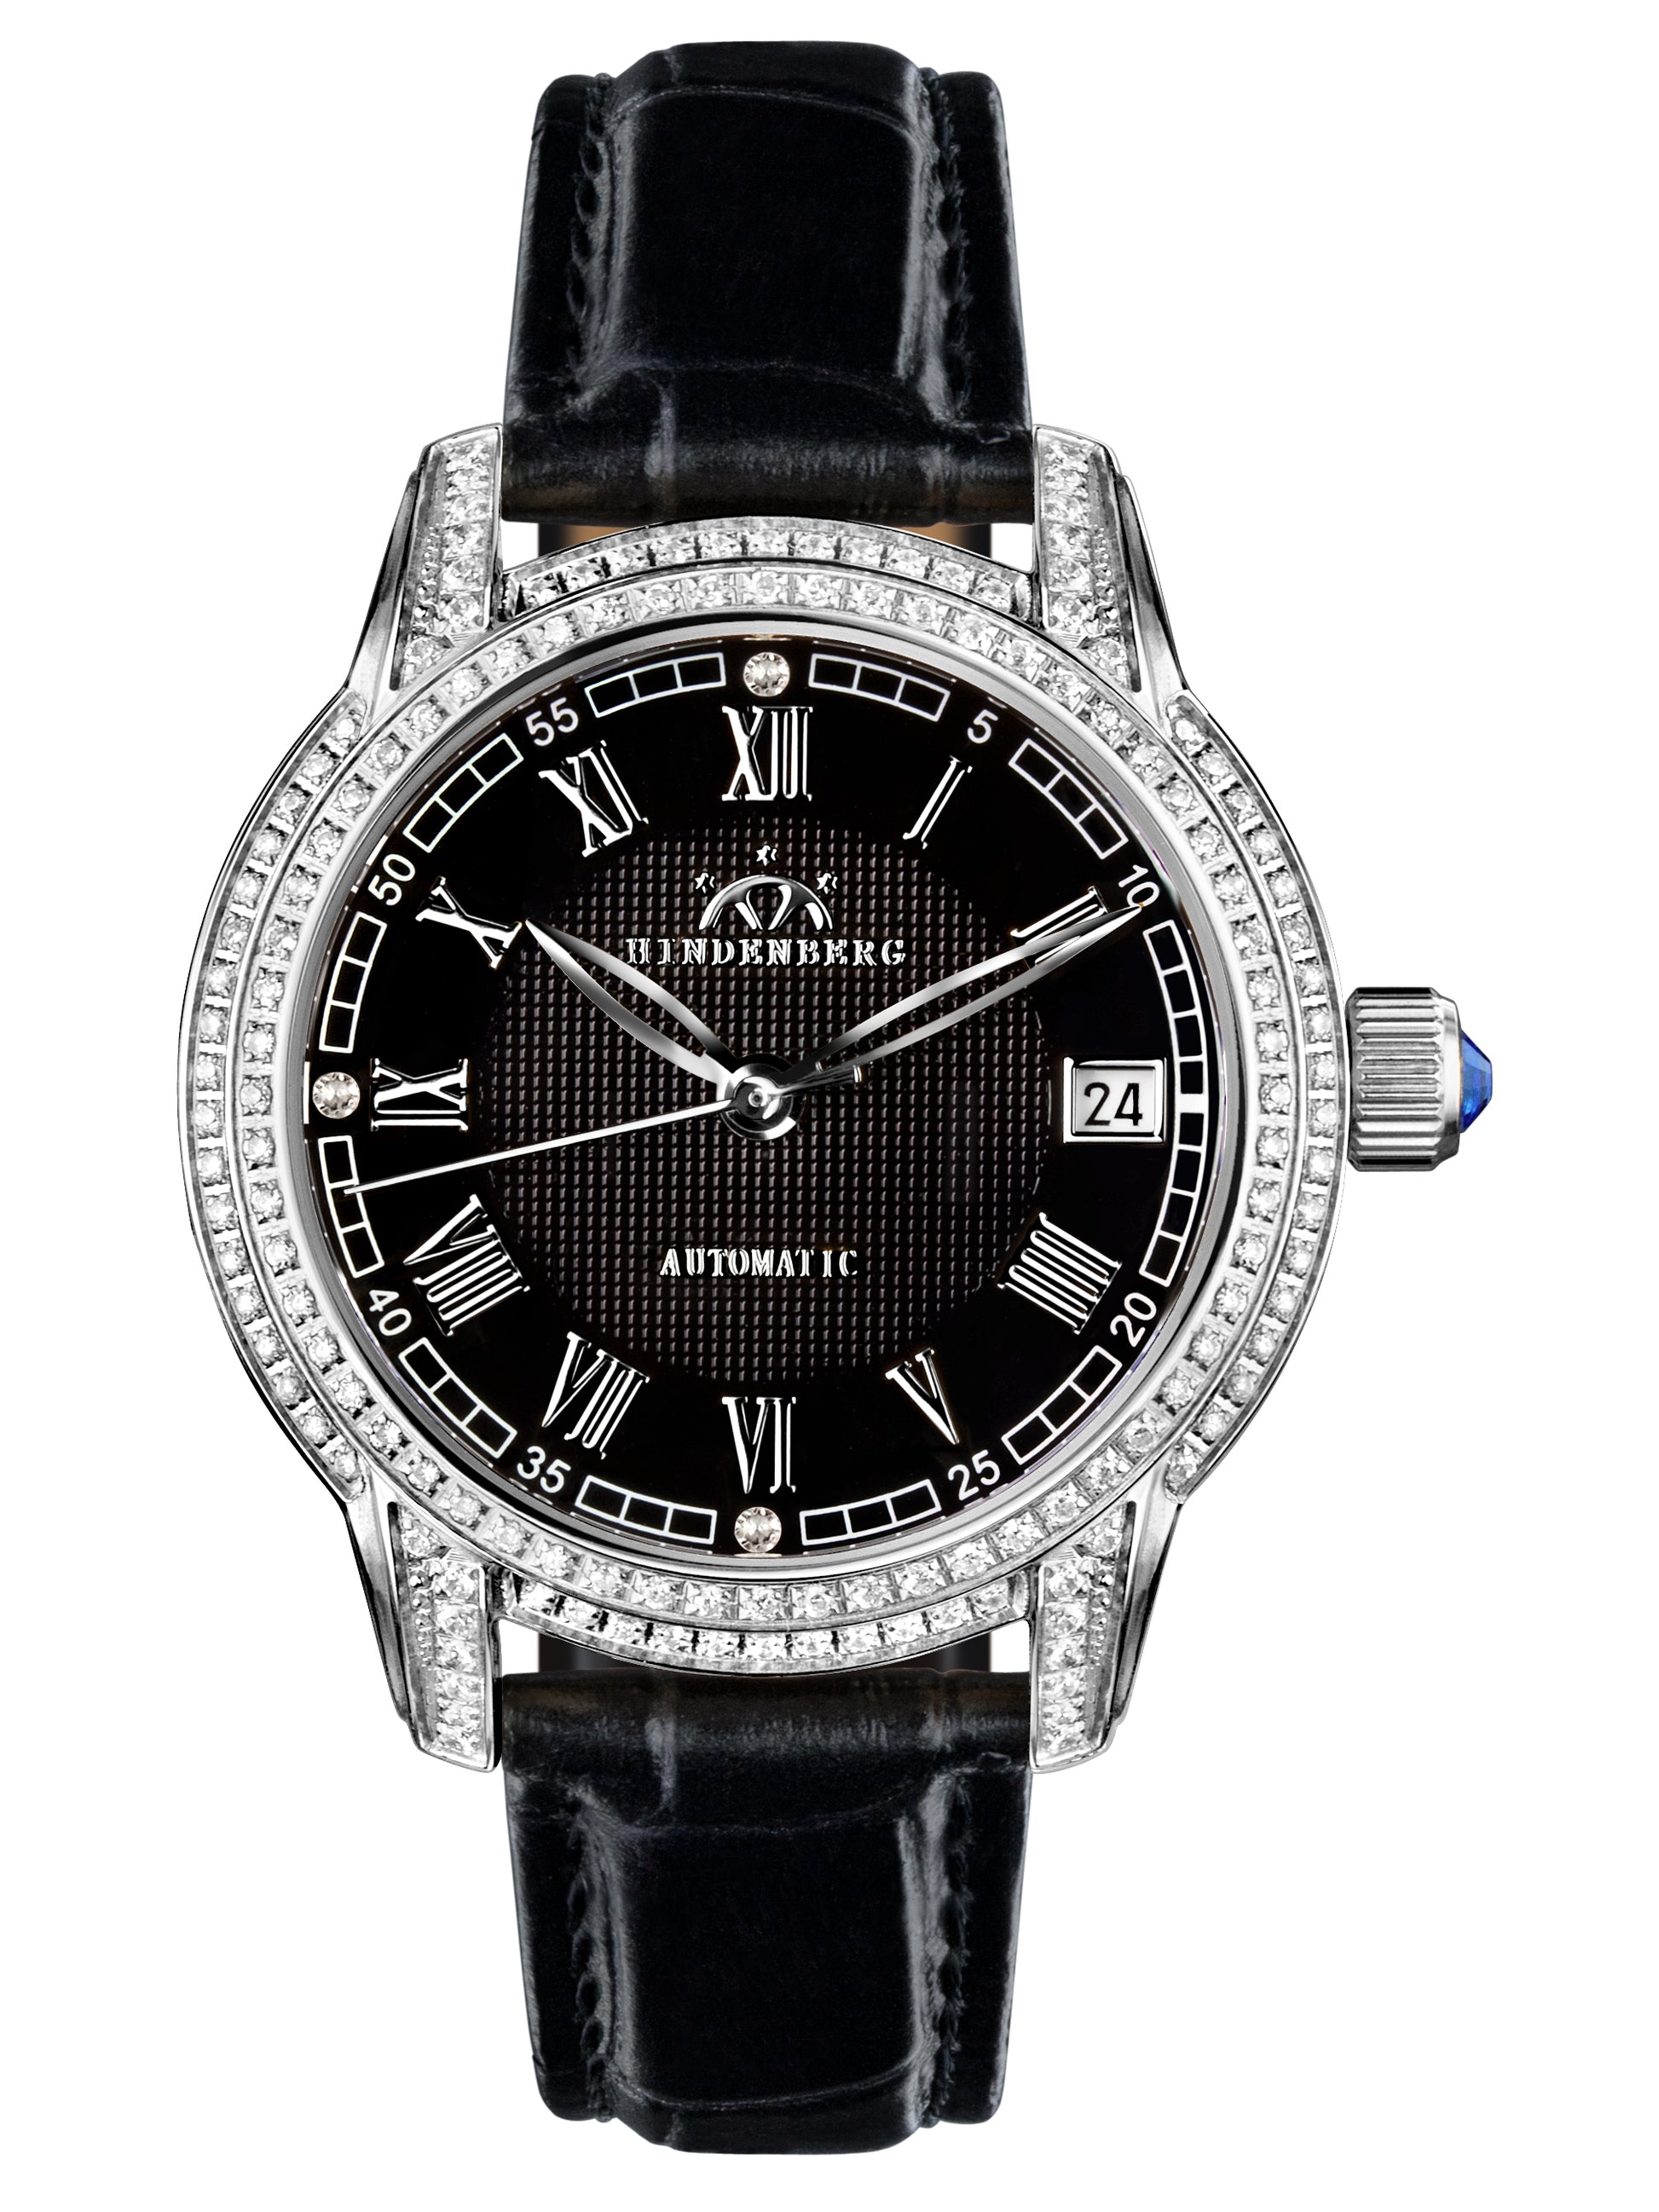 Automatic watches — Duchess II — Hindenberg — steel black